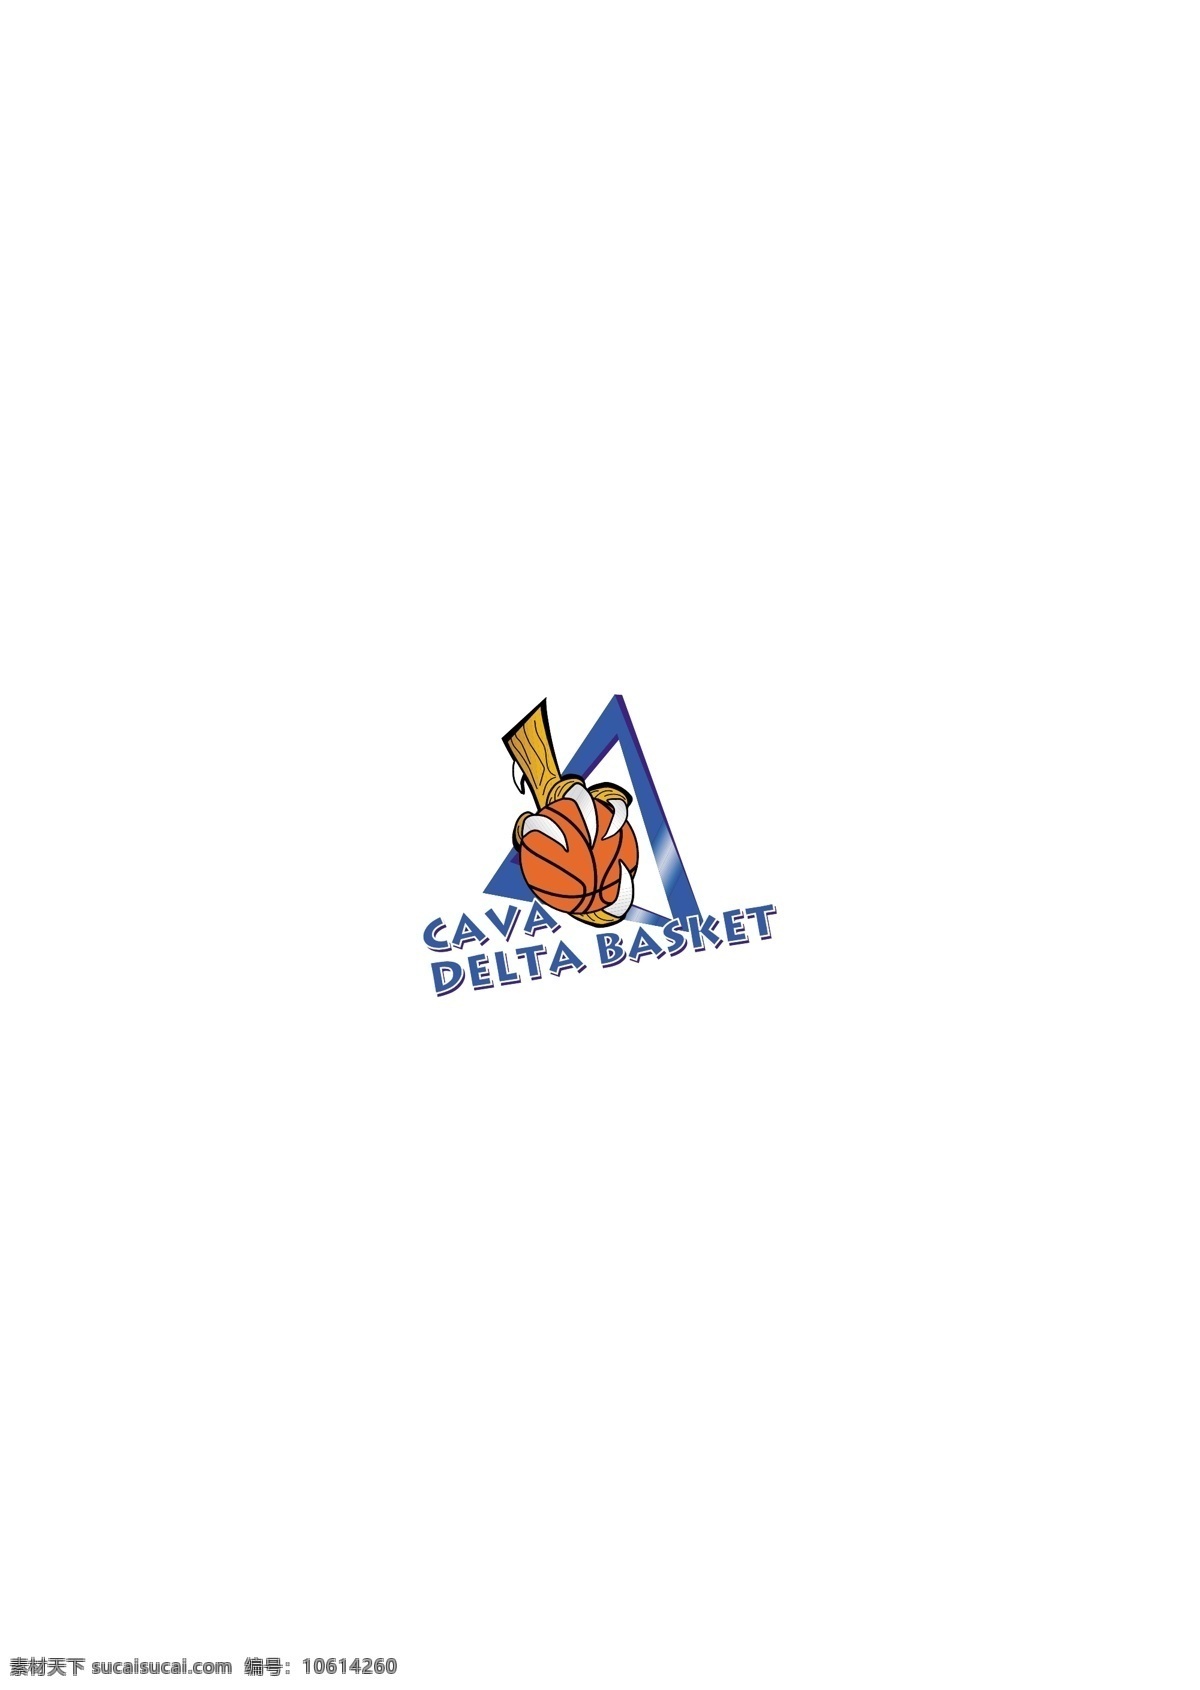 logo大全 logo 设计欣赏 商业矢量 矢量下载 deltabasketcava 运动 赛事 标志设计 欣赏 网页矢量 矢量图 其他矢量图